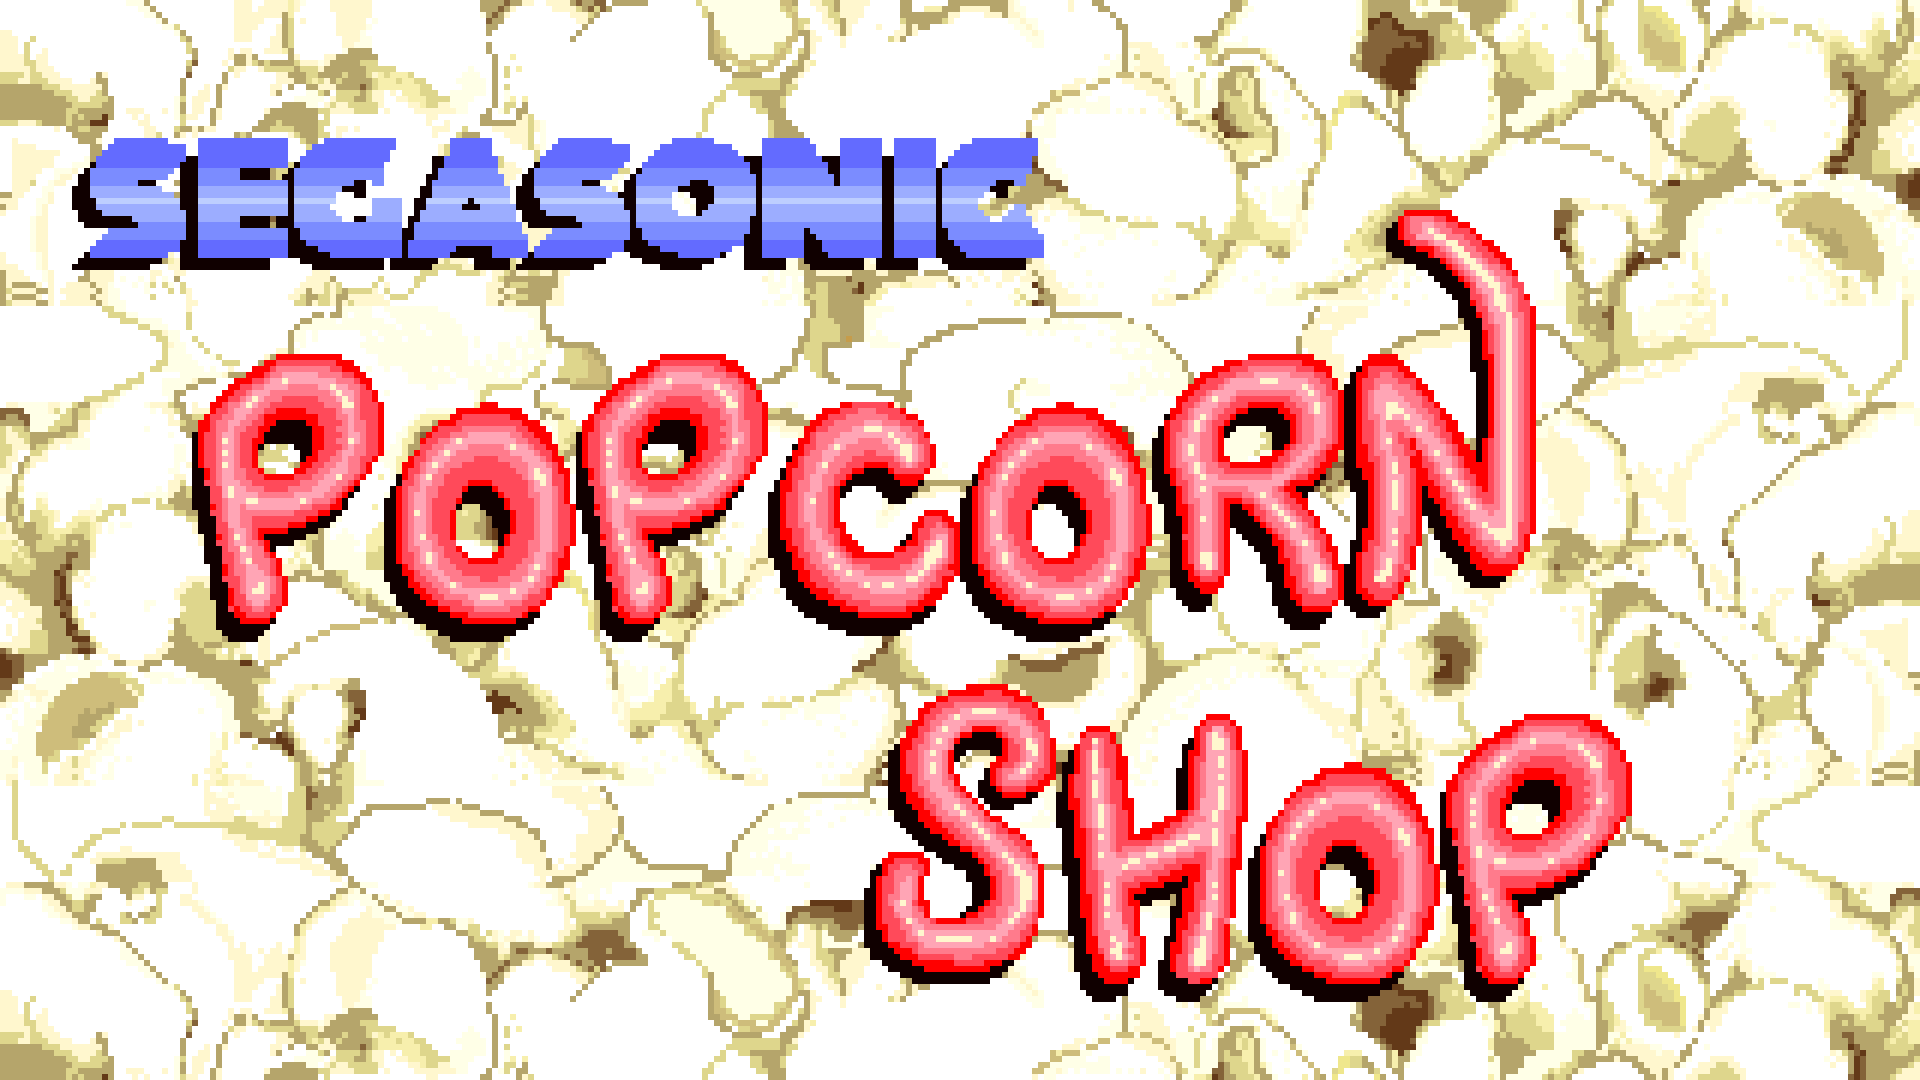 SegaSonic Popcorn Shop Logo